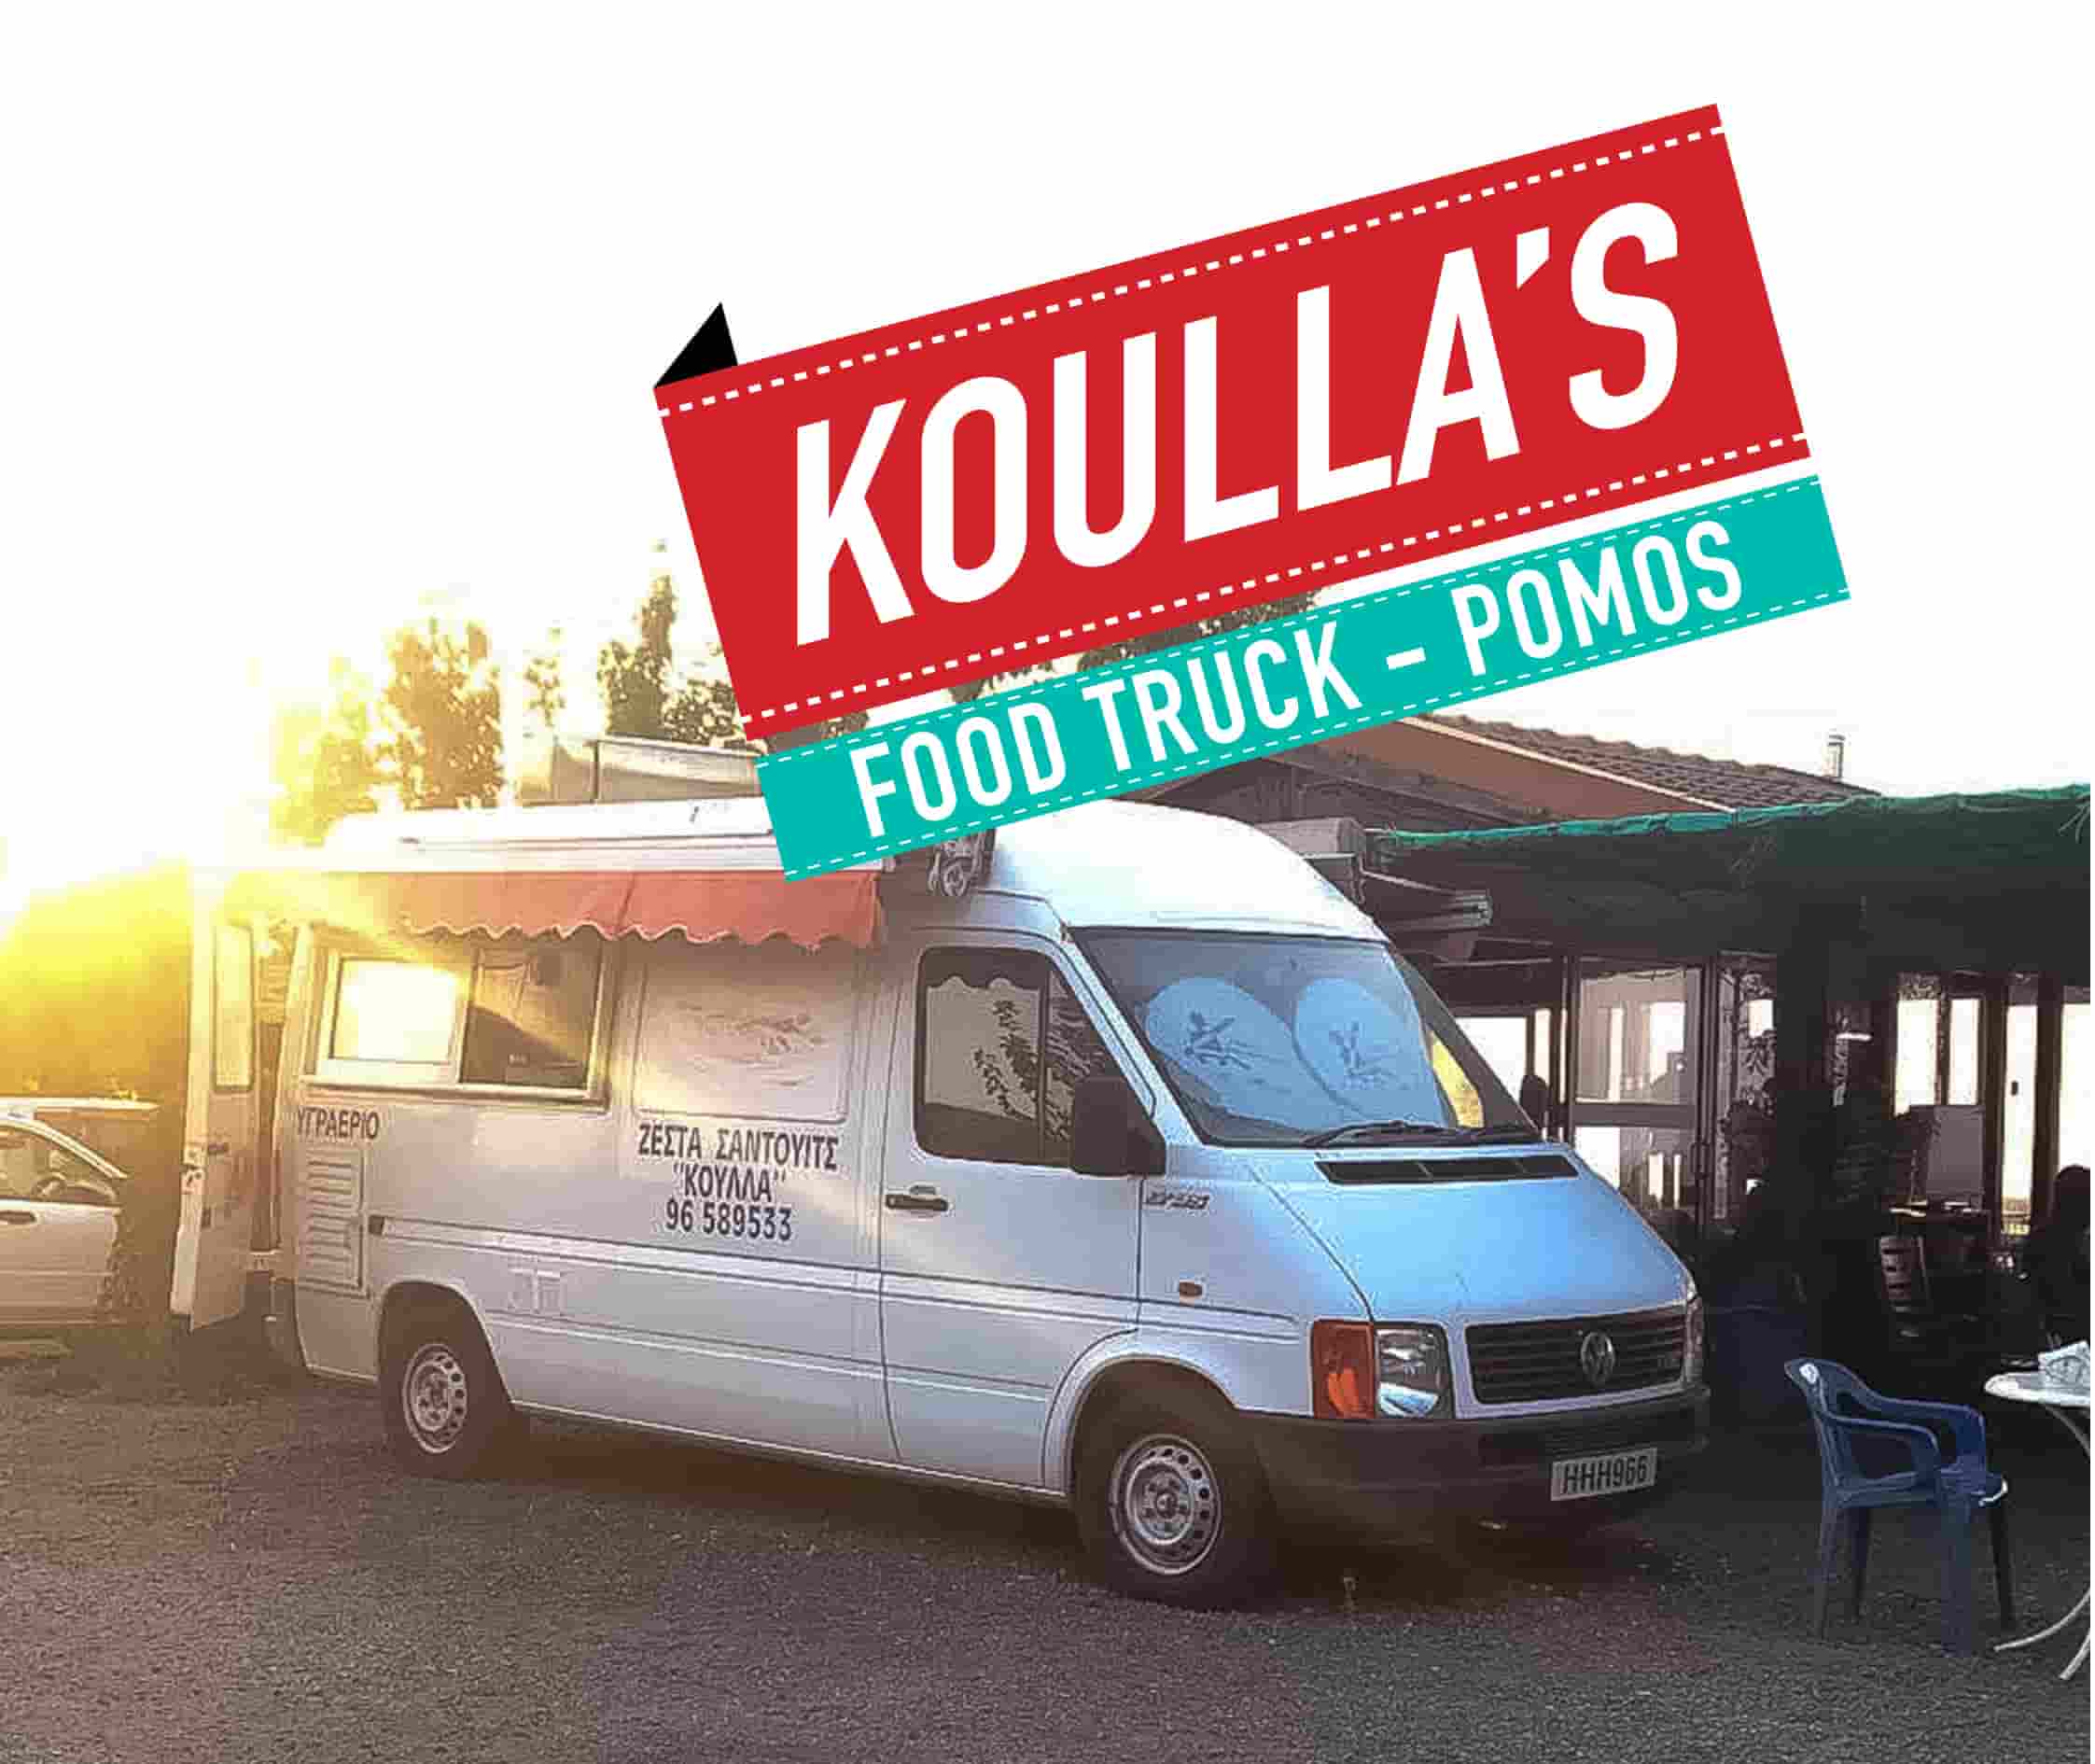 Koulla’s food truck – Pomos